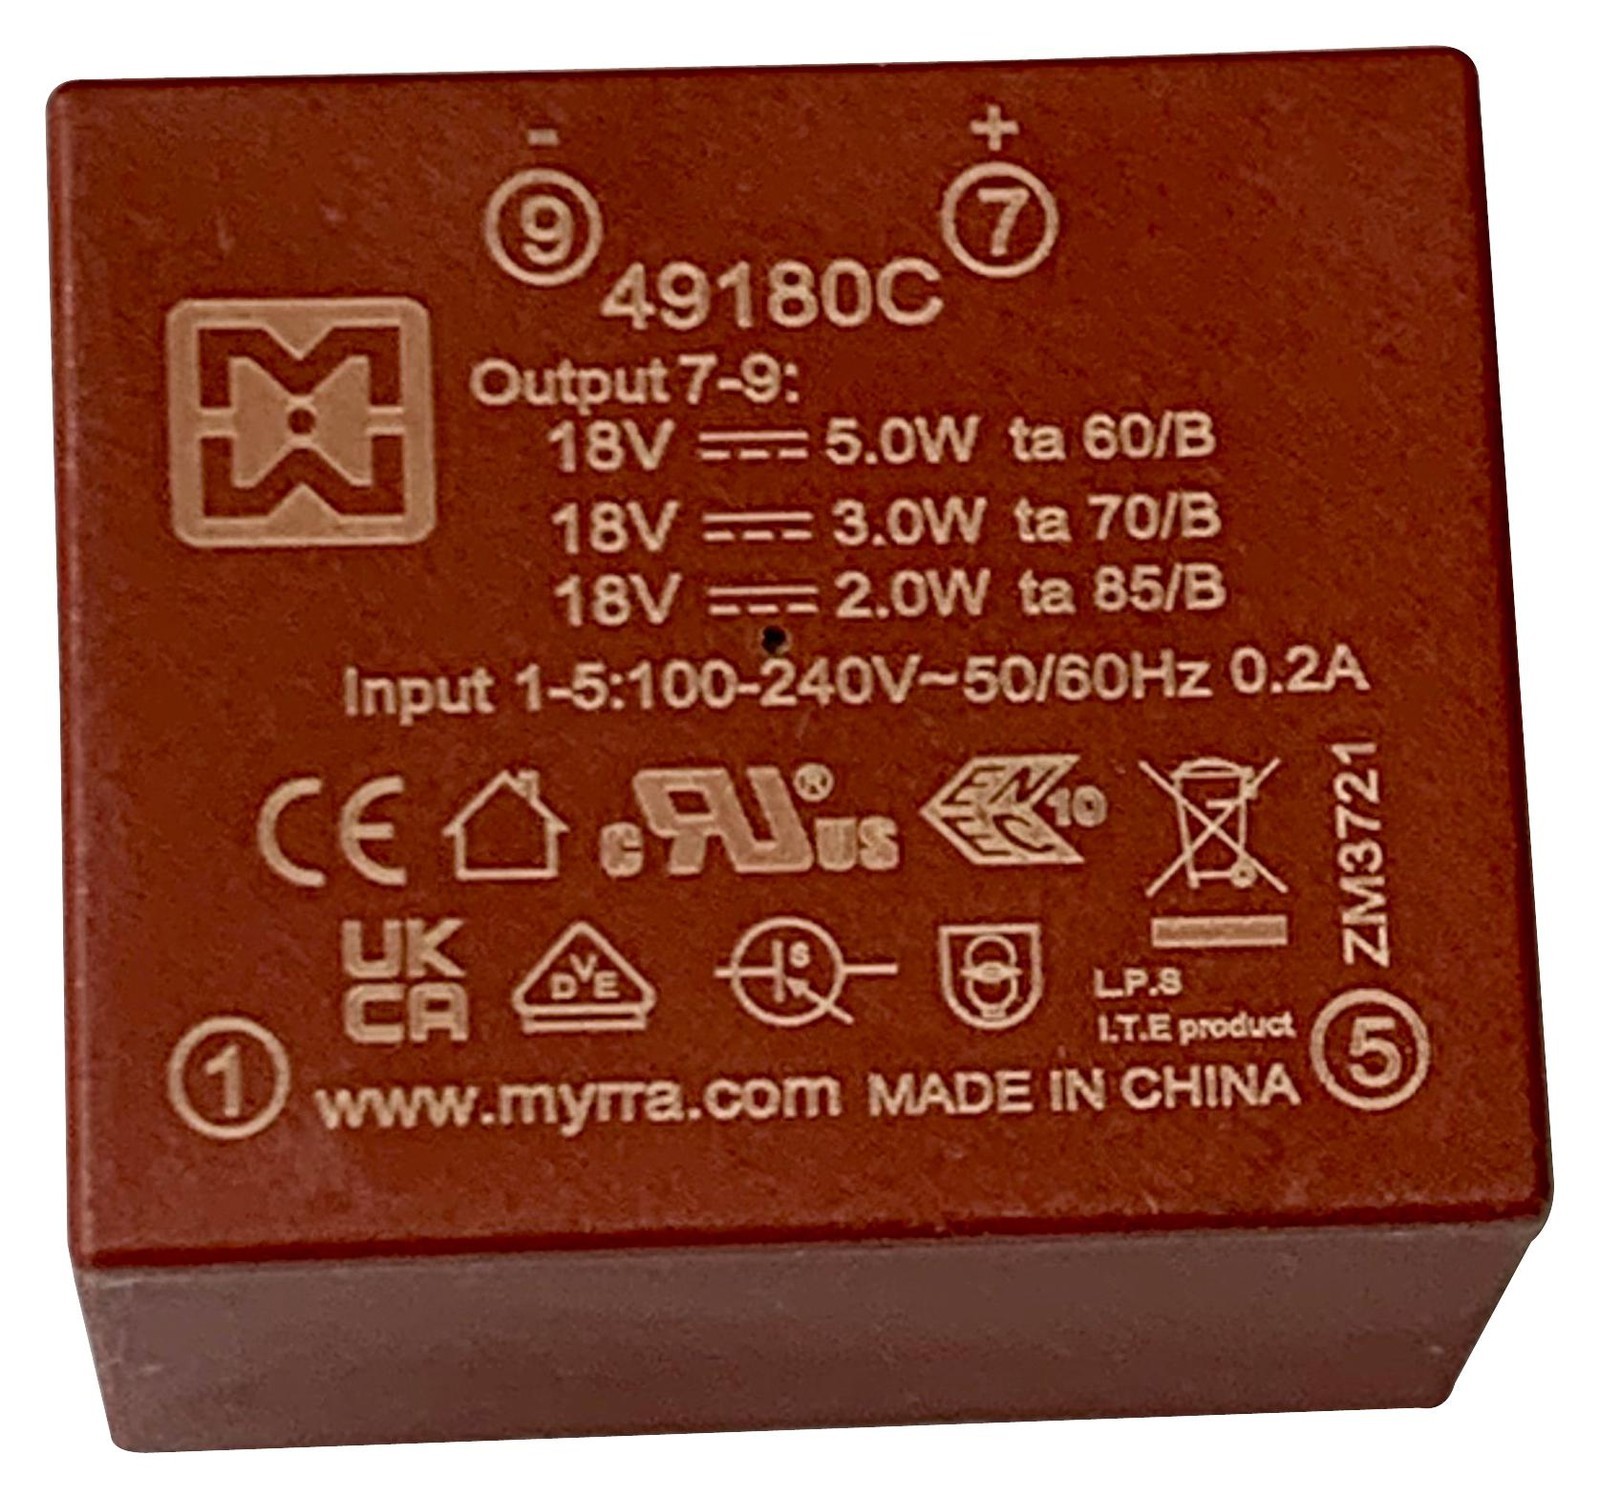 Myrra 49180C Power Supply, Ac-Dc, 18V, 0.28A